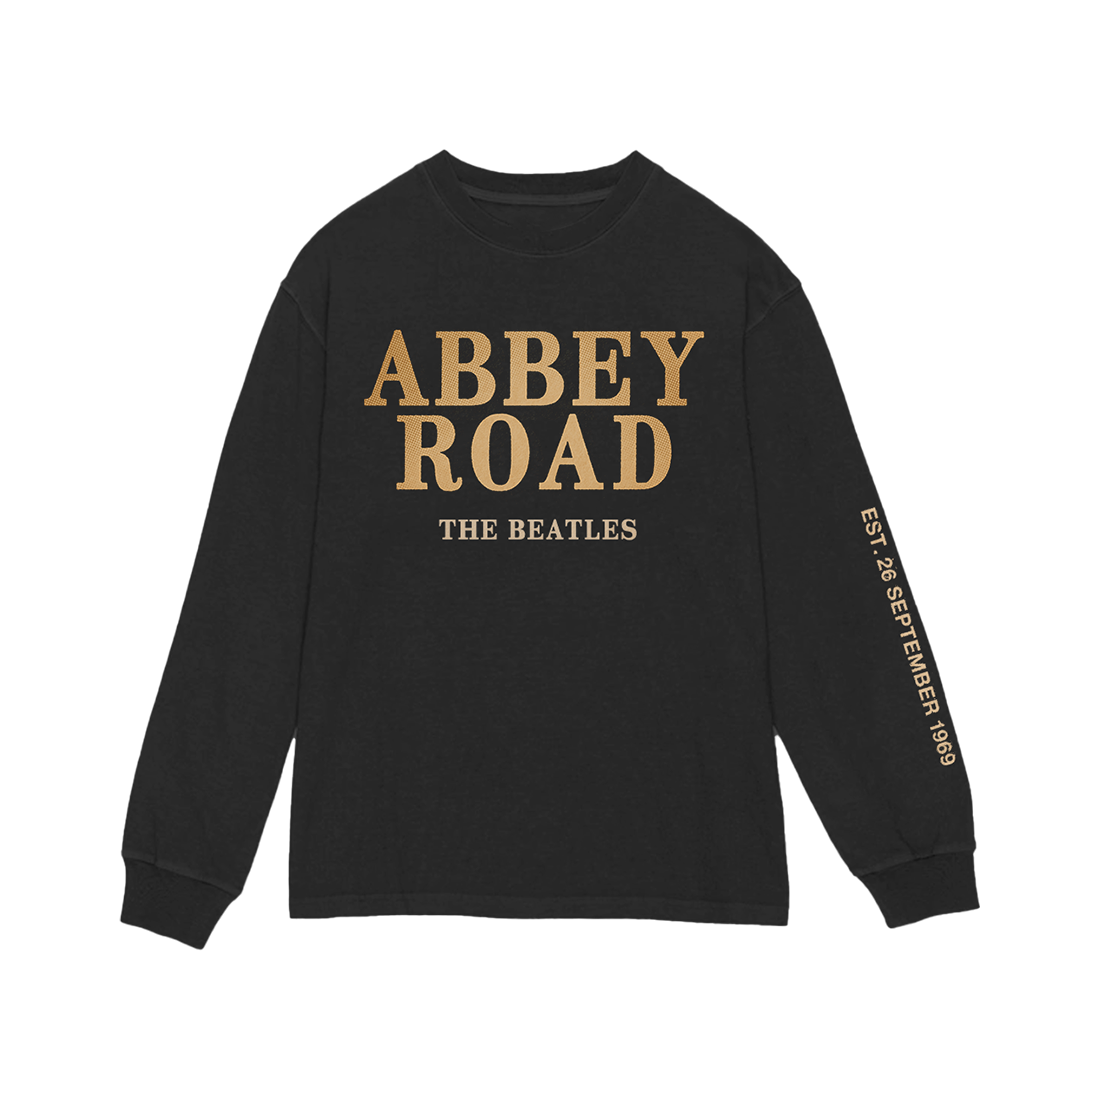 The Beatles - Abbey Road September 1969 Longsleeve T-Shirt